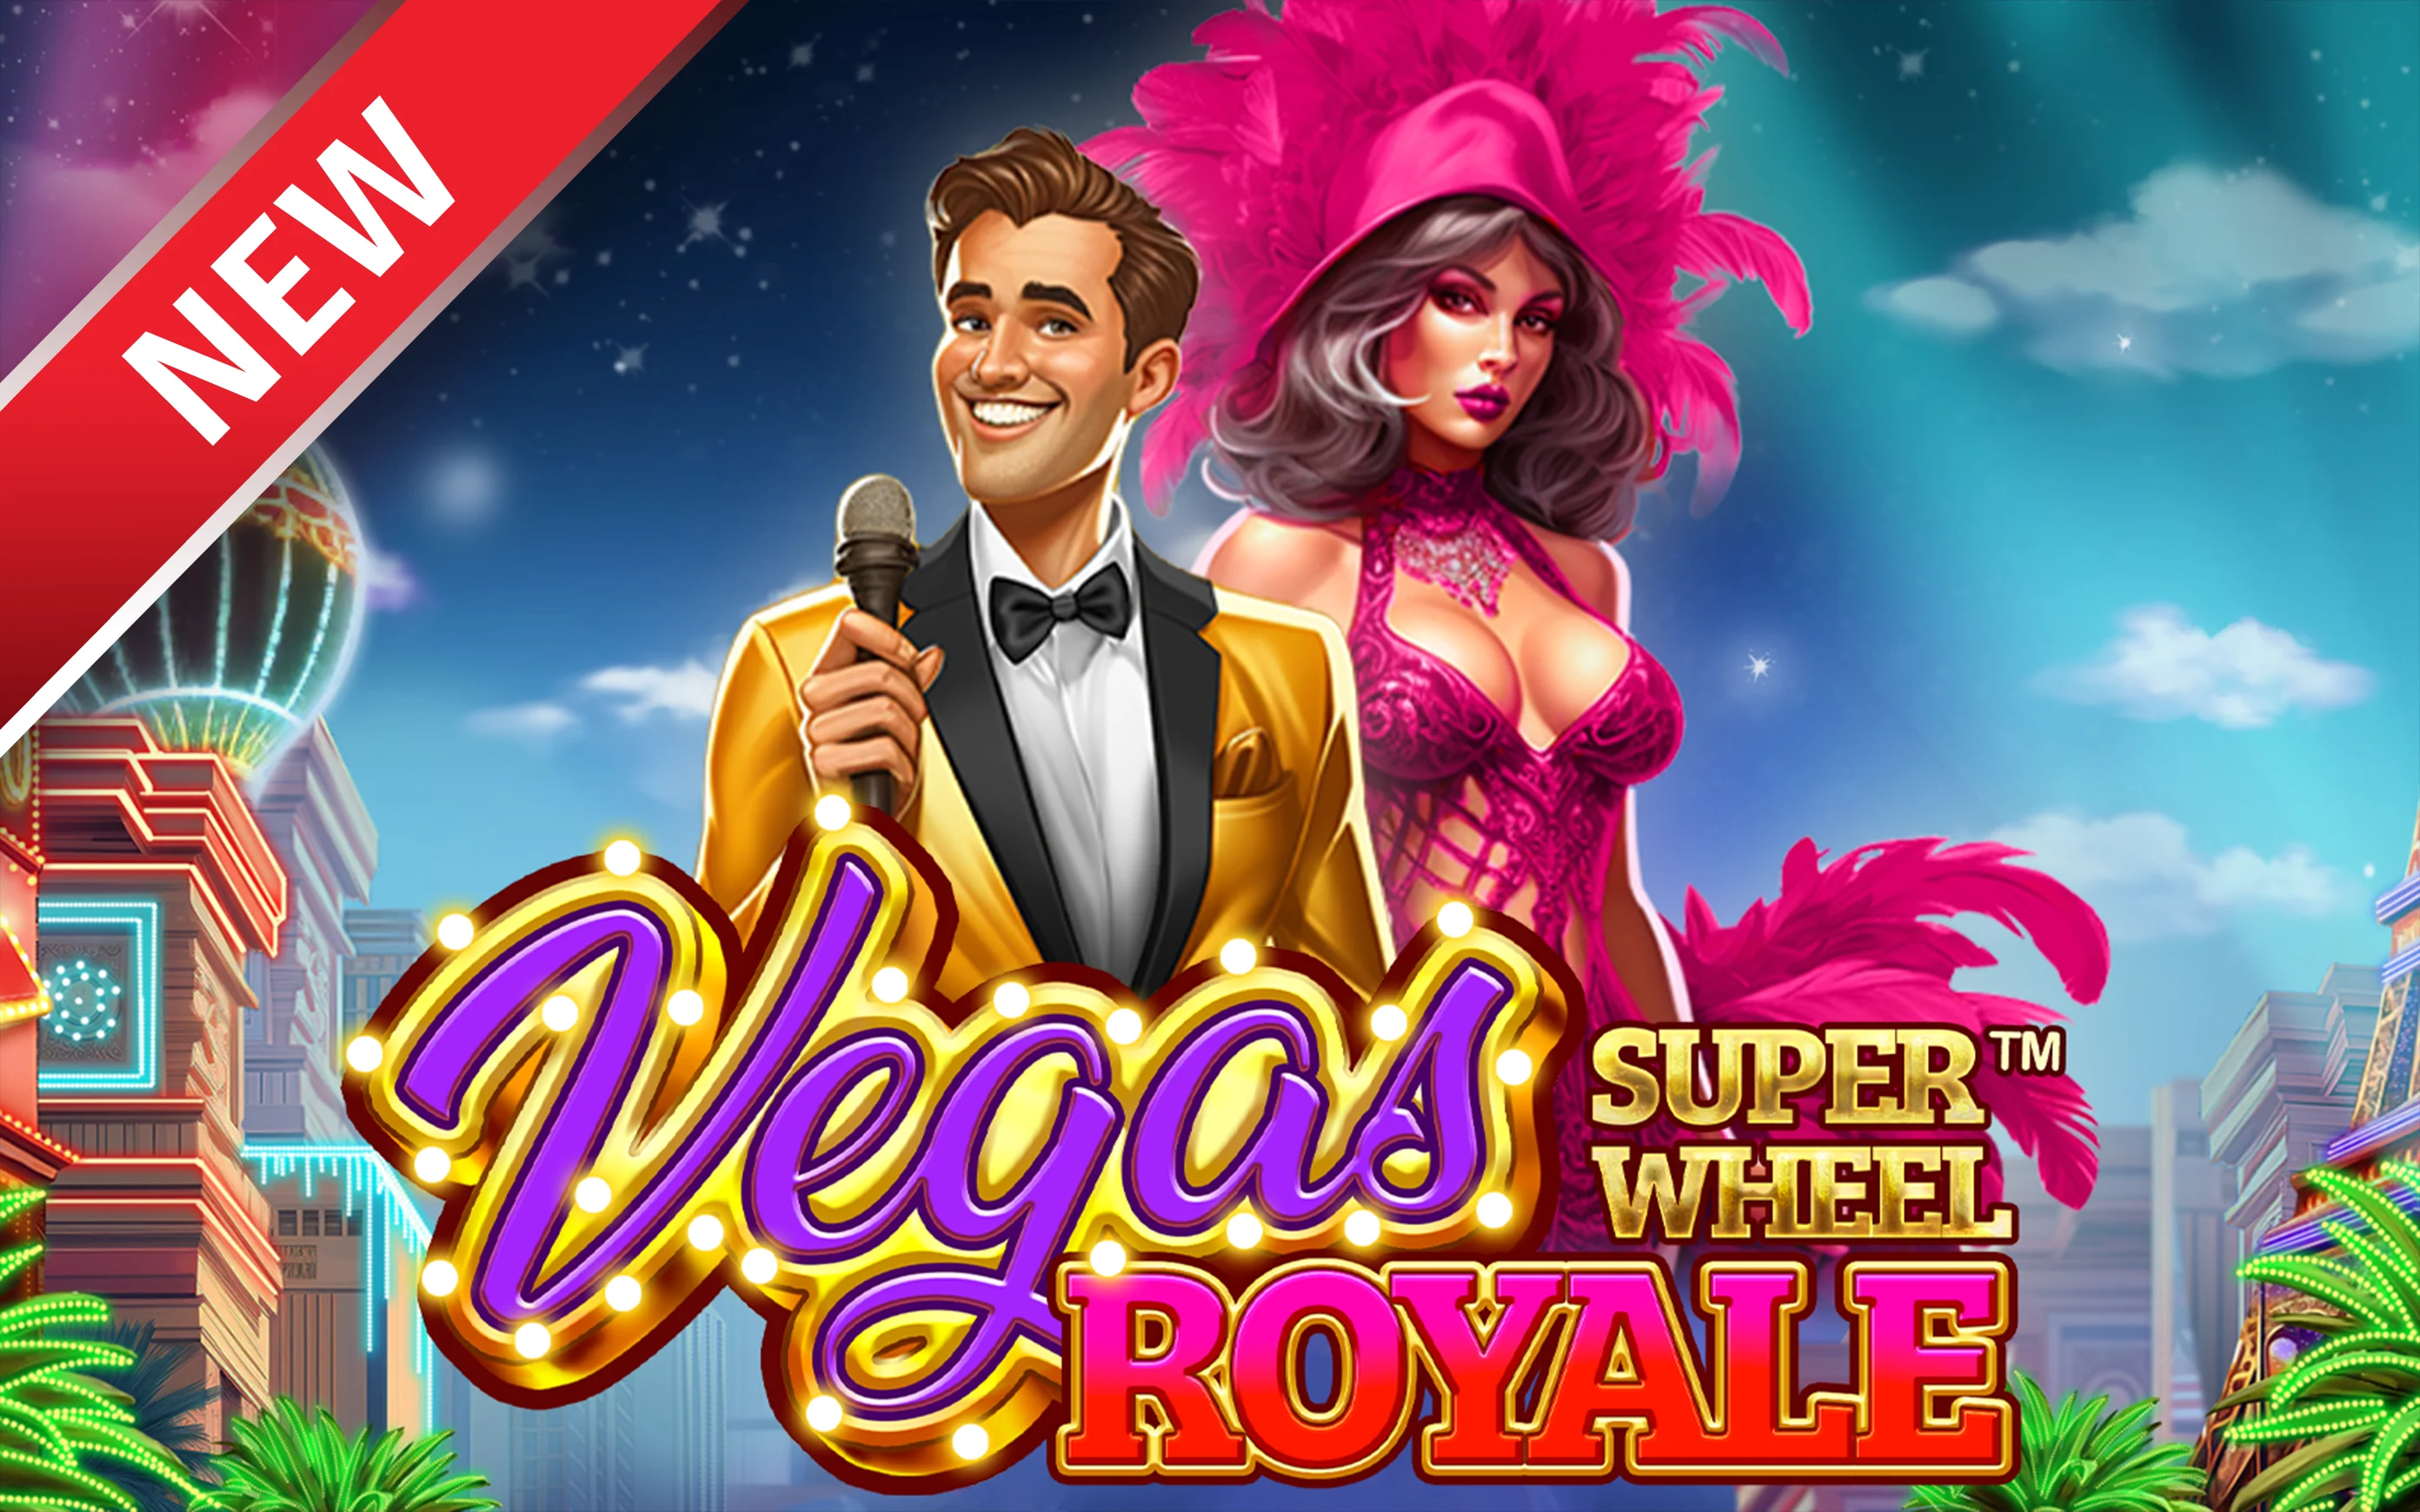 Speel Vegas Royale Super Wheel™ op Starcasino.be online casino